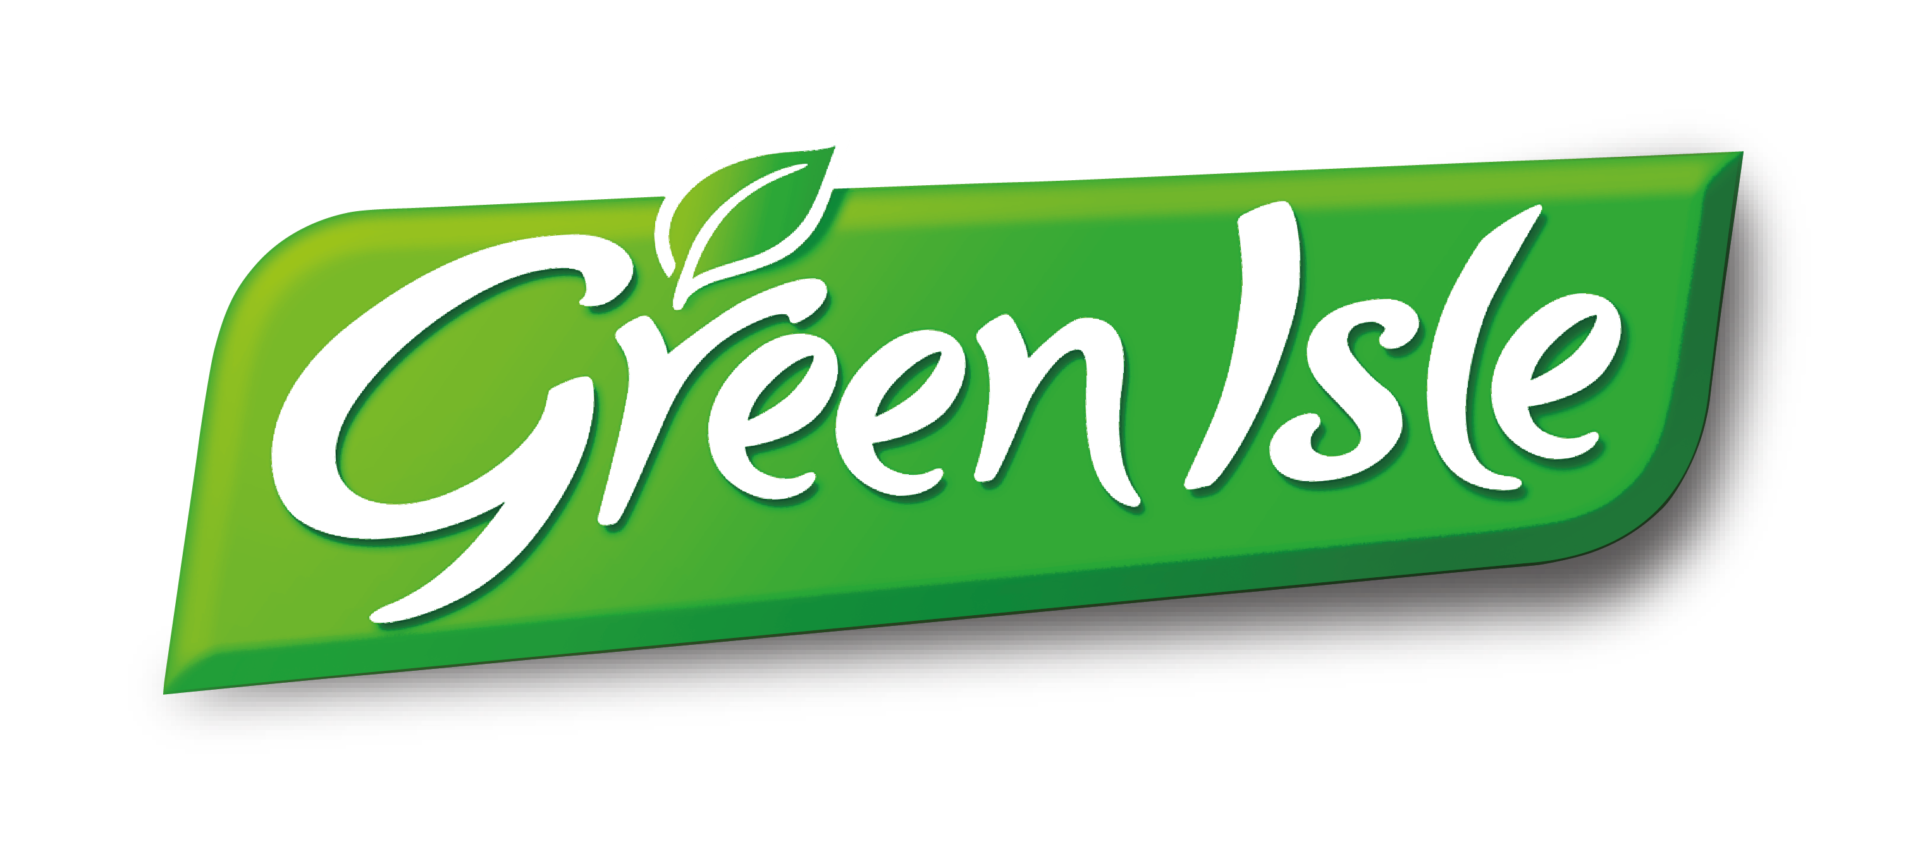 Greenisle logo